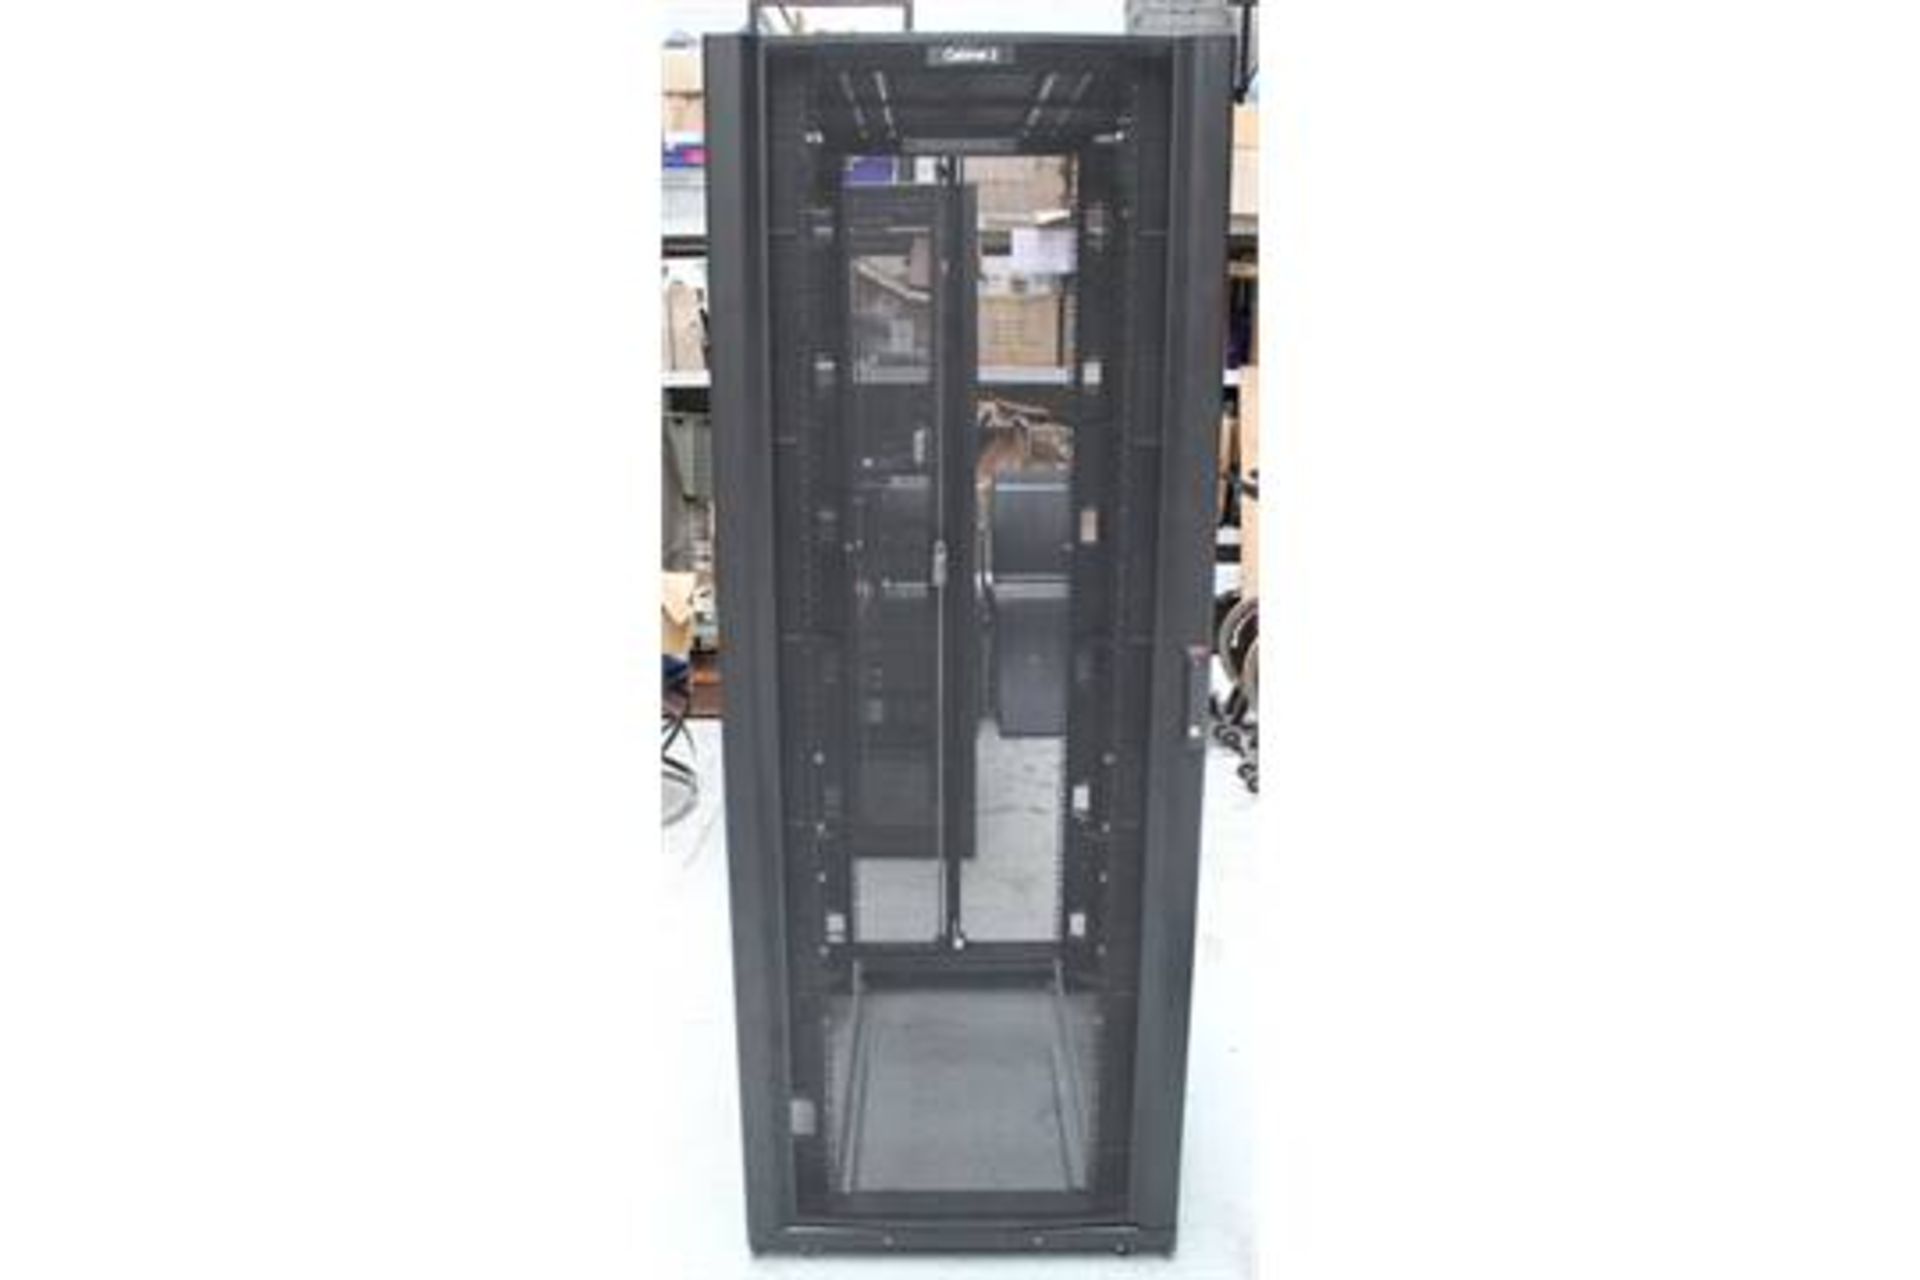 1 x APC Netshelter 42U Server Enclosure - AR3100 Black - Suitable For 19 Inch Compliant Equipment - - Image 3 of 4